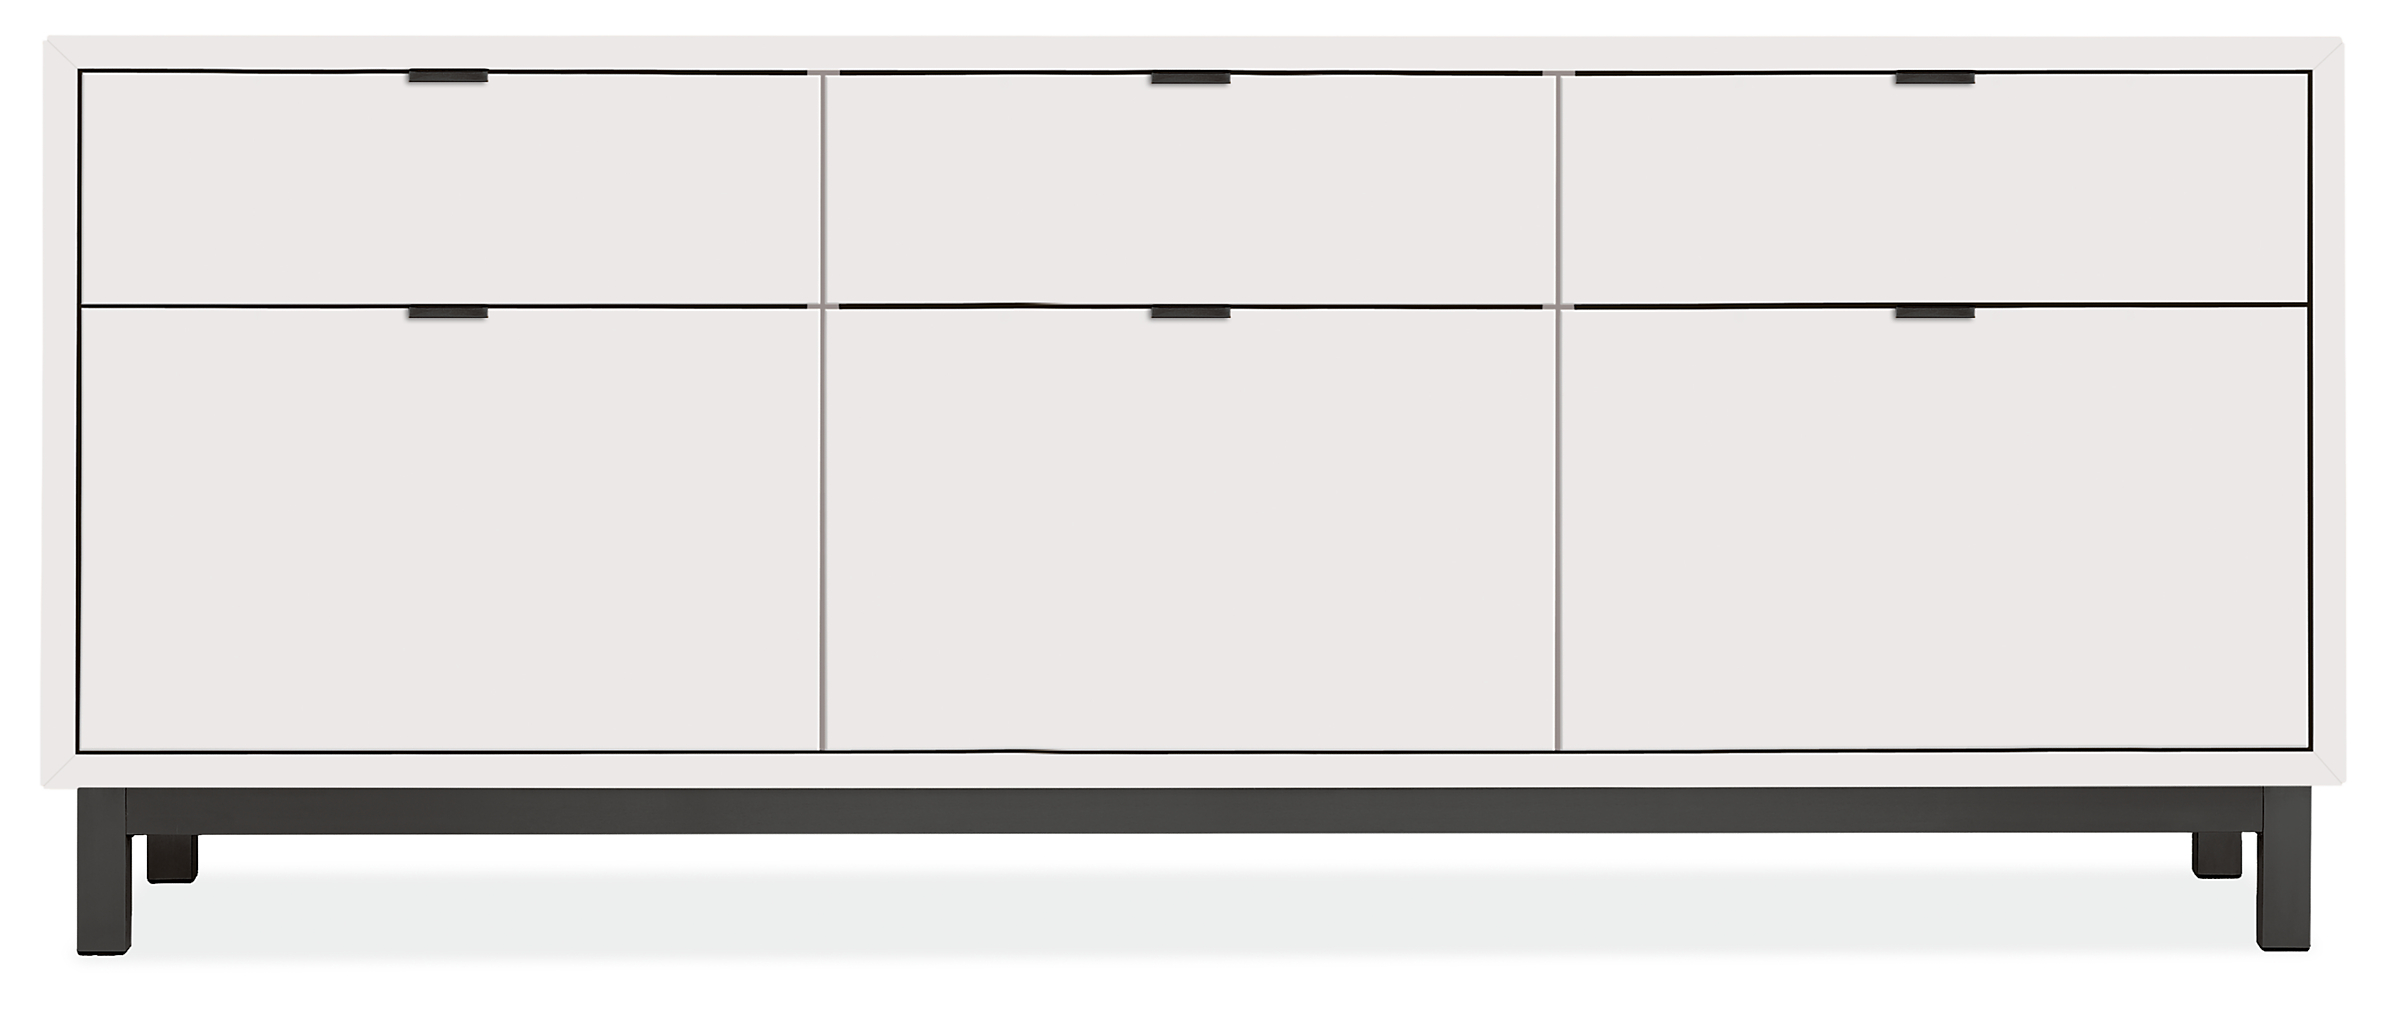 Copenhagen File Storage Cabinets